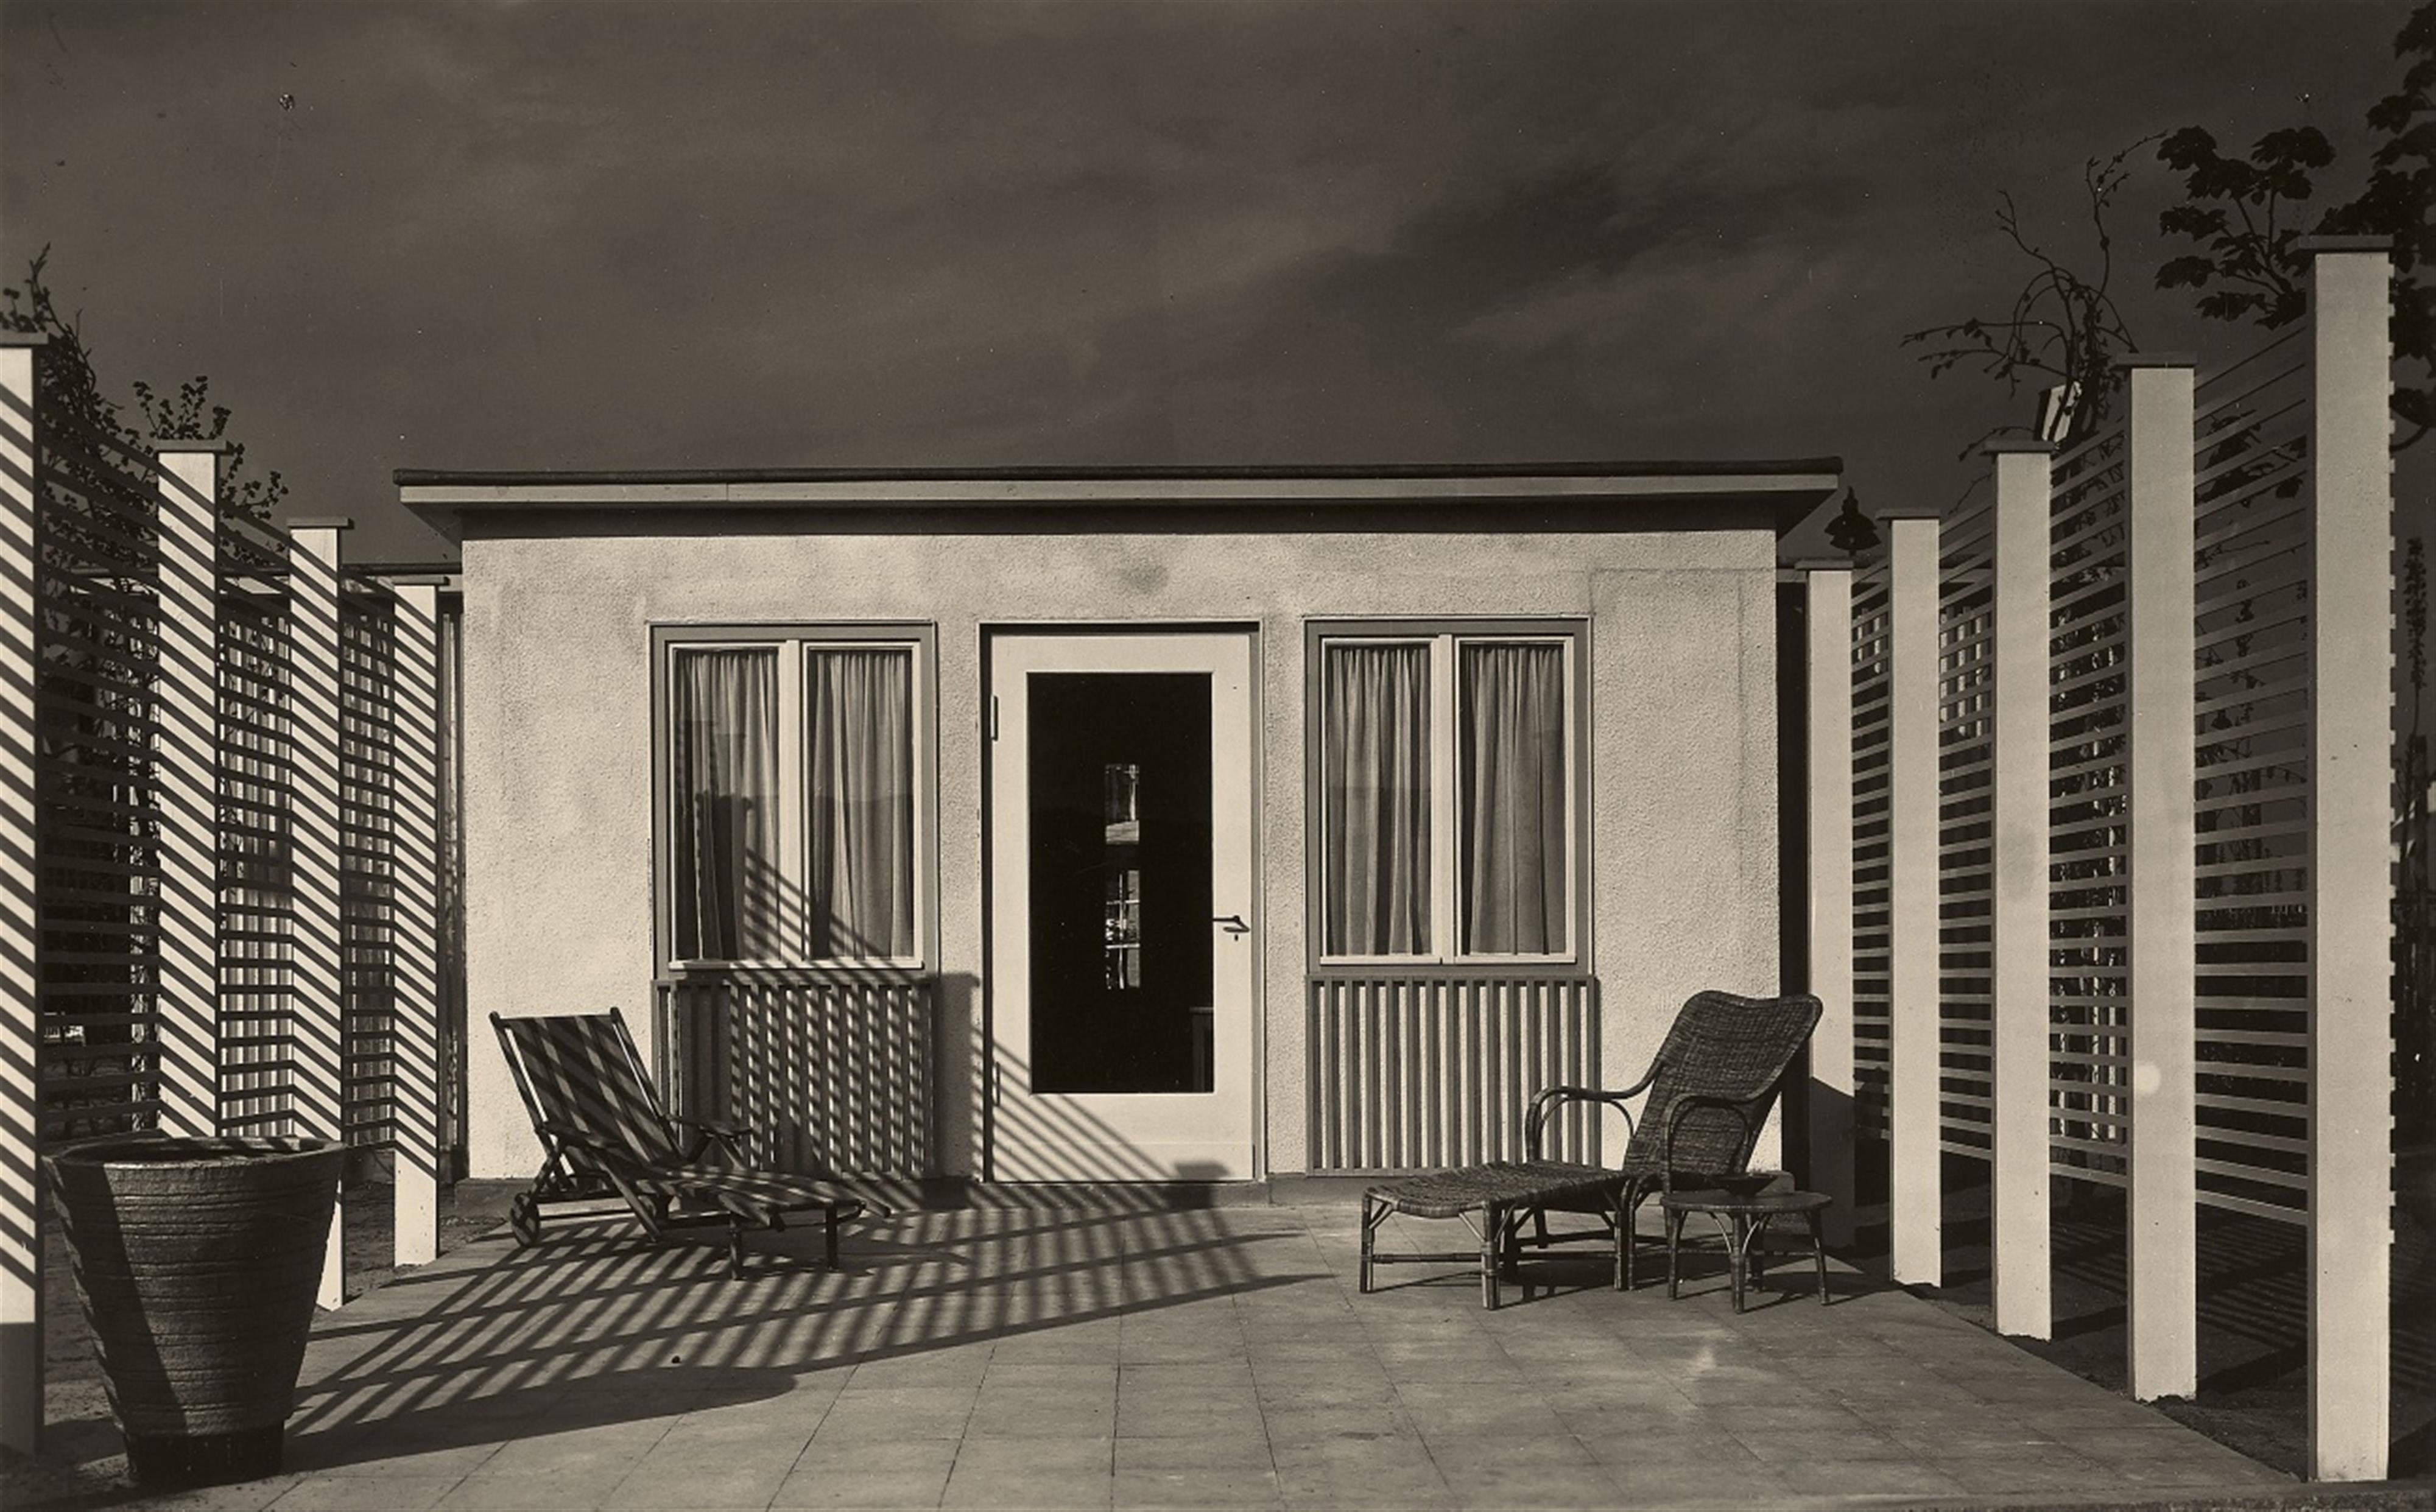 Arthur Koester
Leitner - Ausstellung "Das wachsende Haus", Berlin - image-5